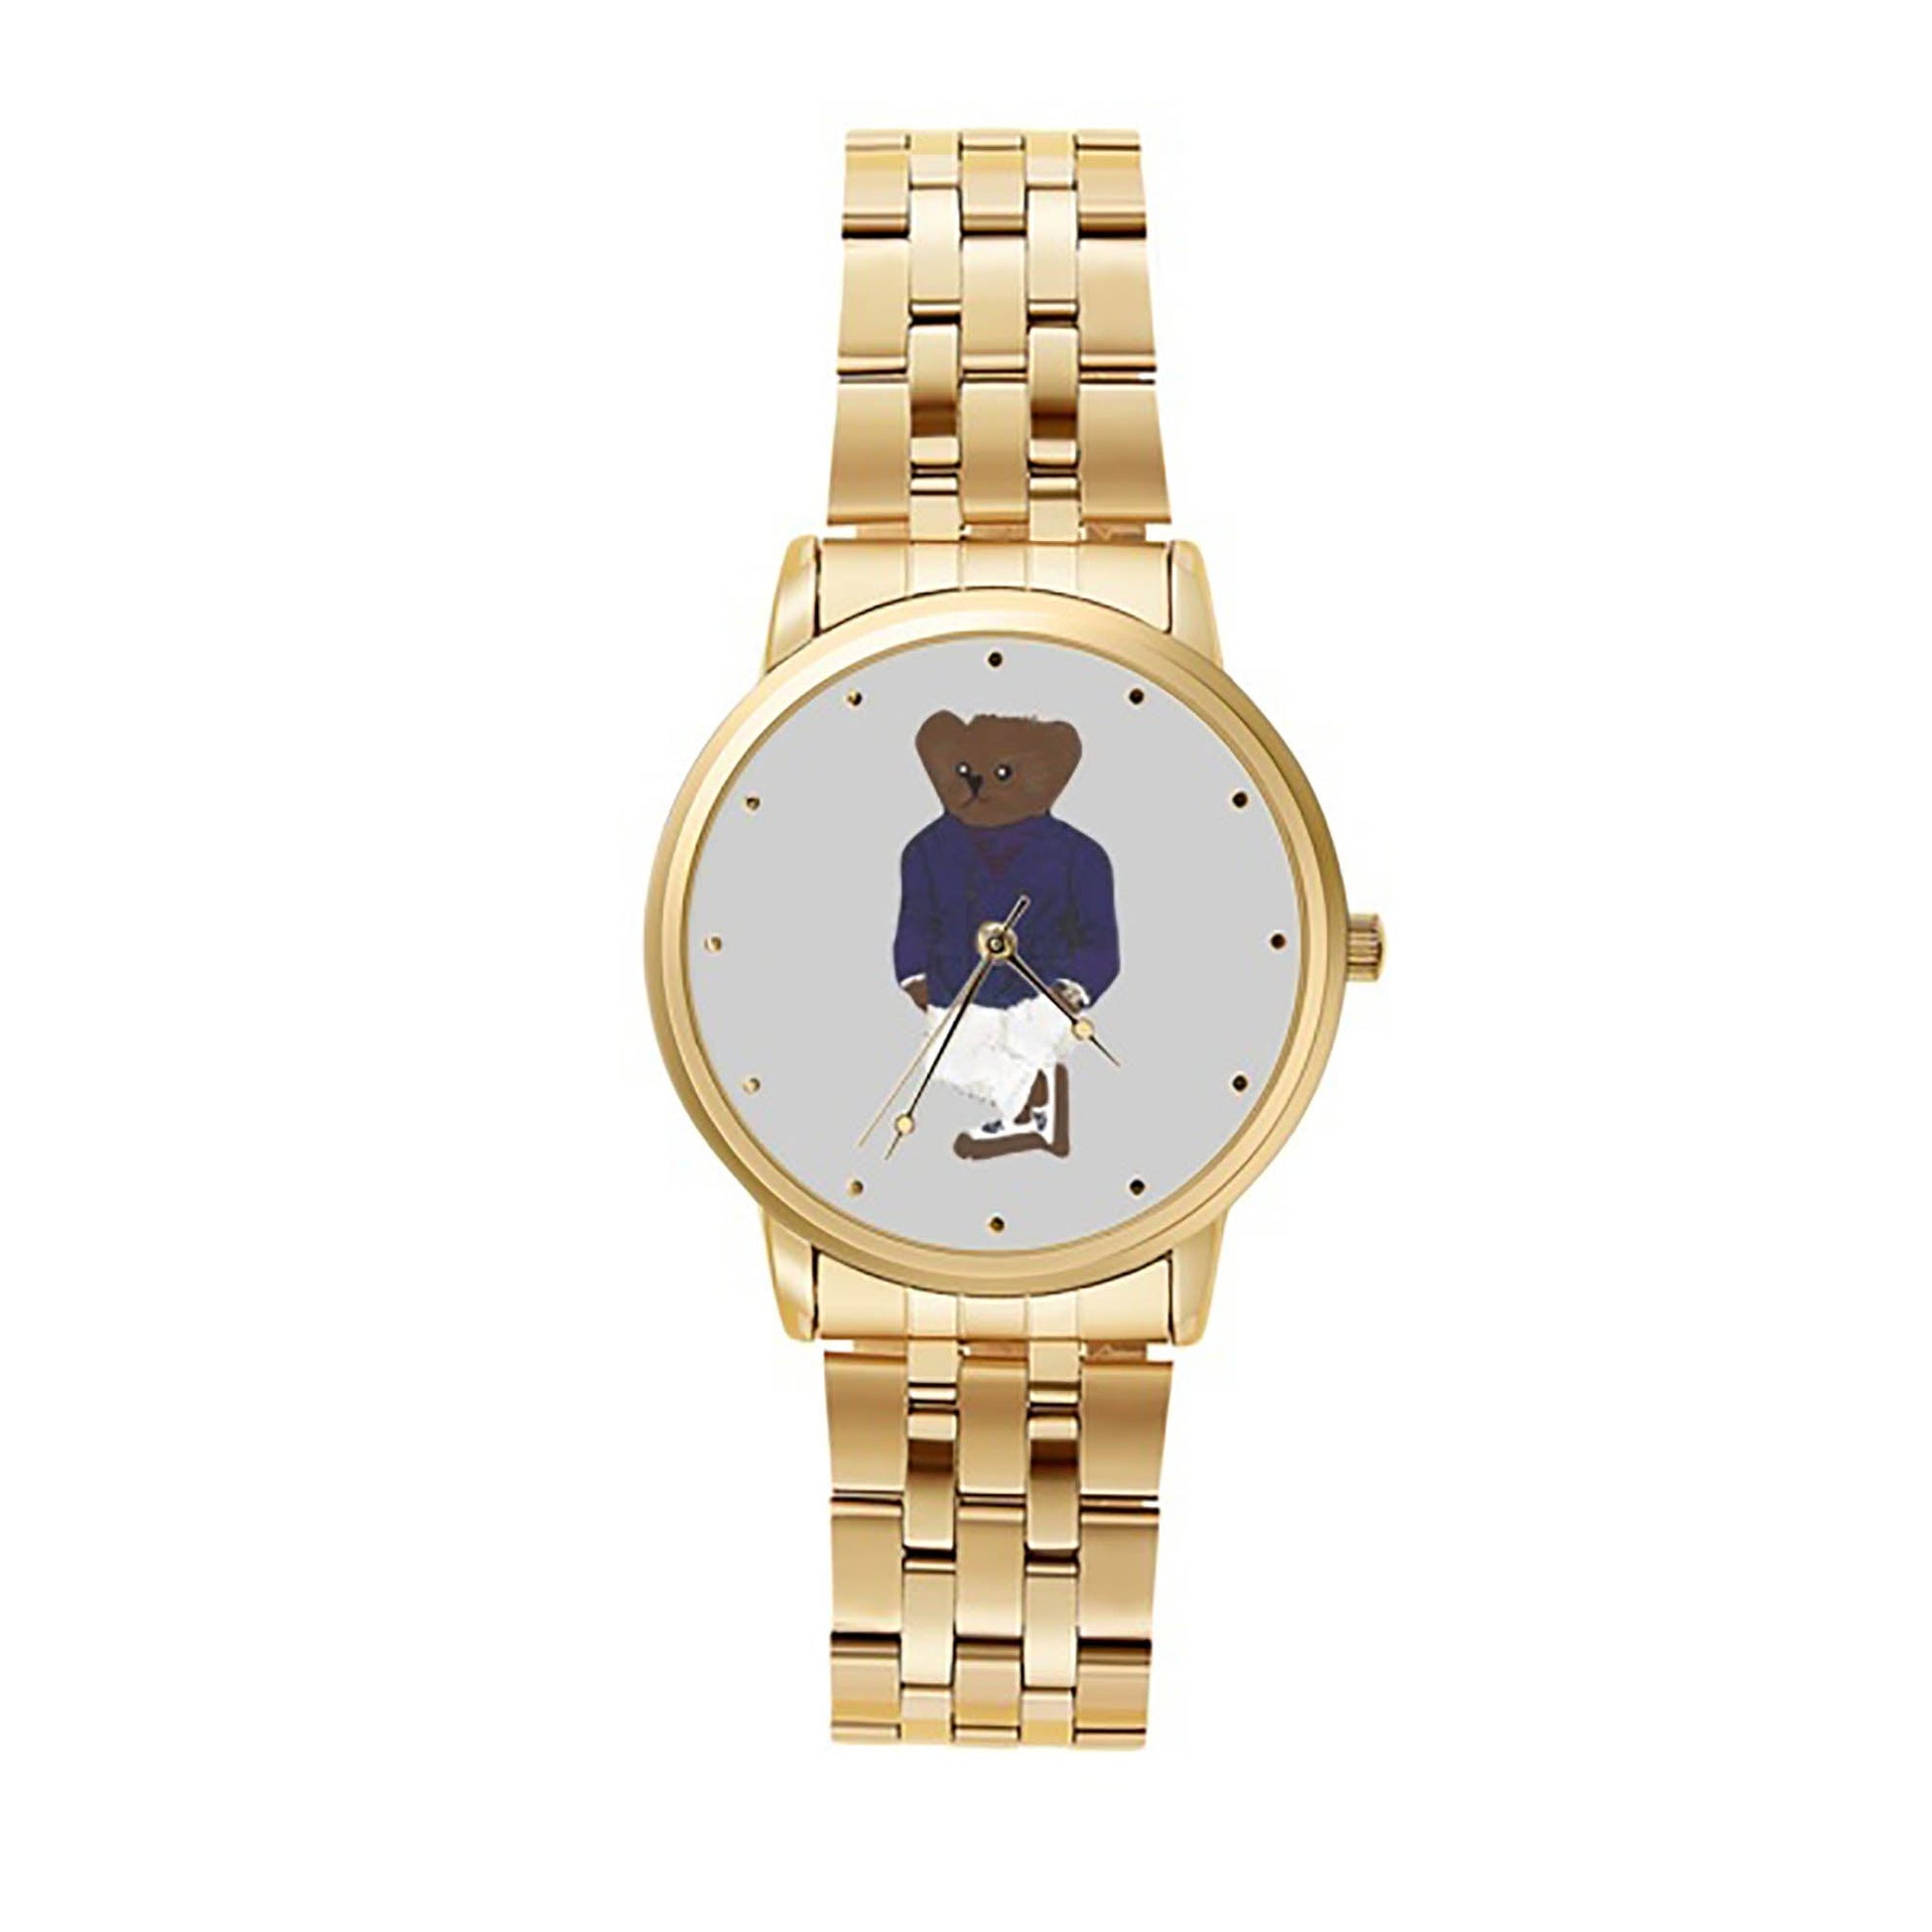 Polo Bear elegance by Ralph Lauren Sport Metal Watch ST99